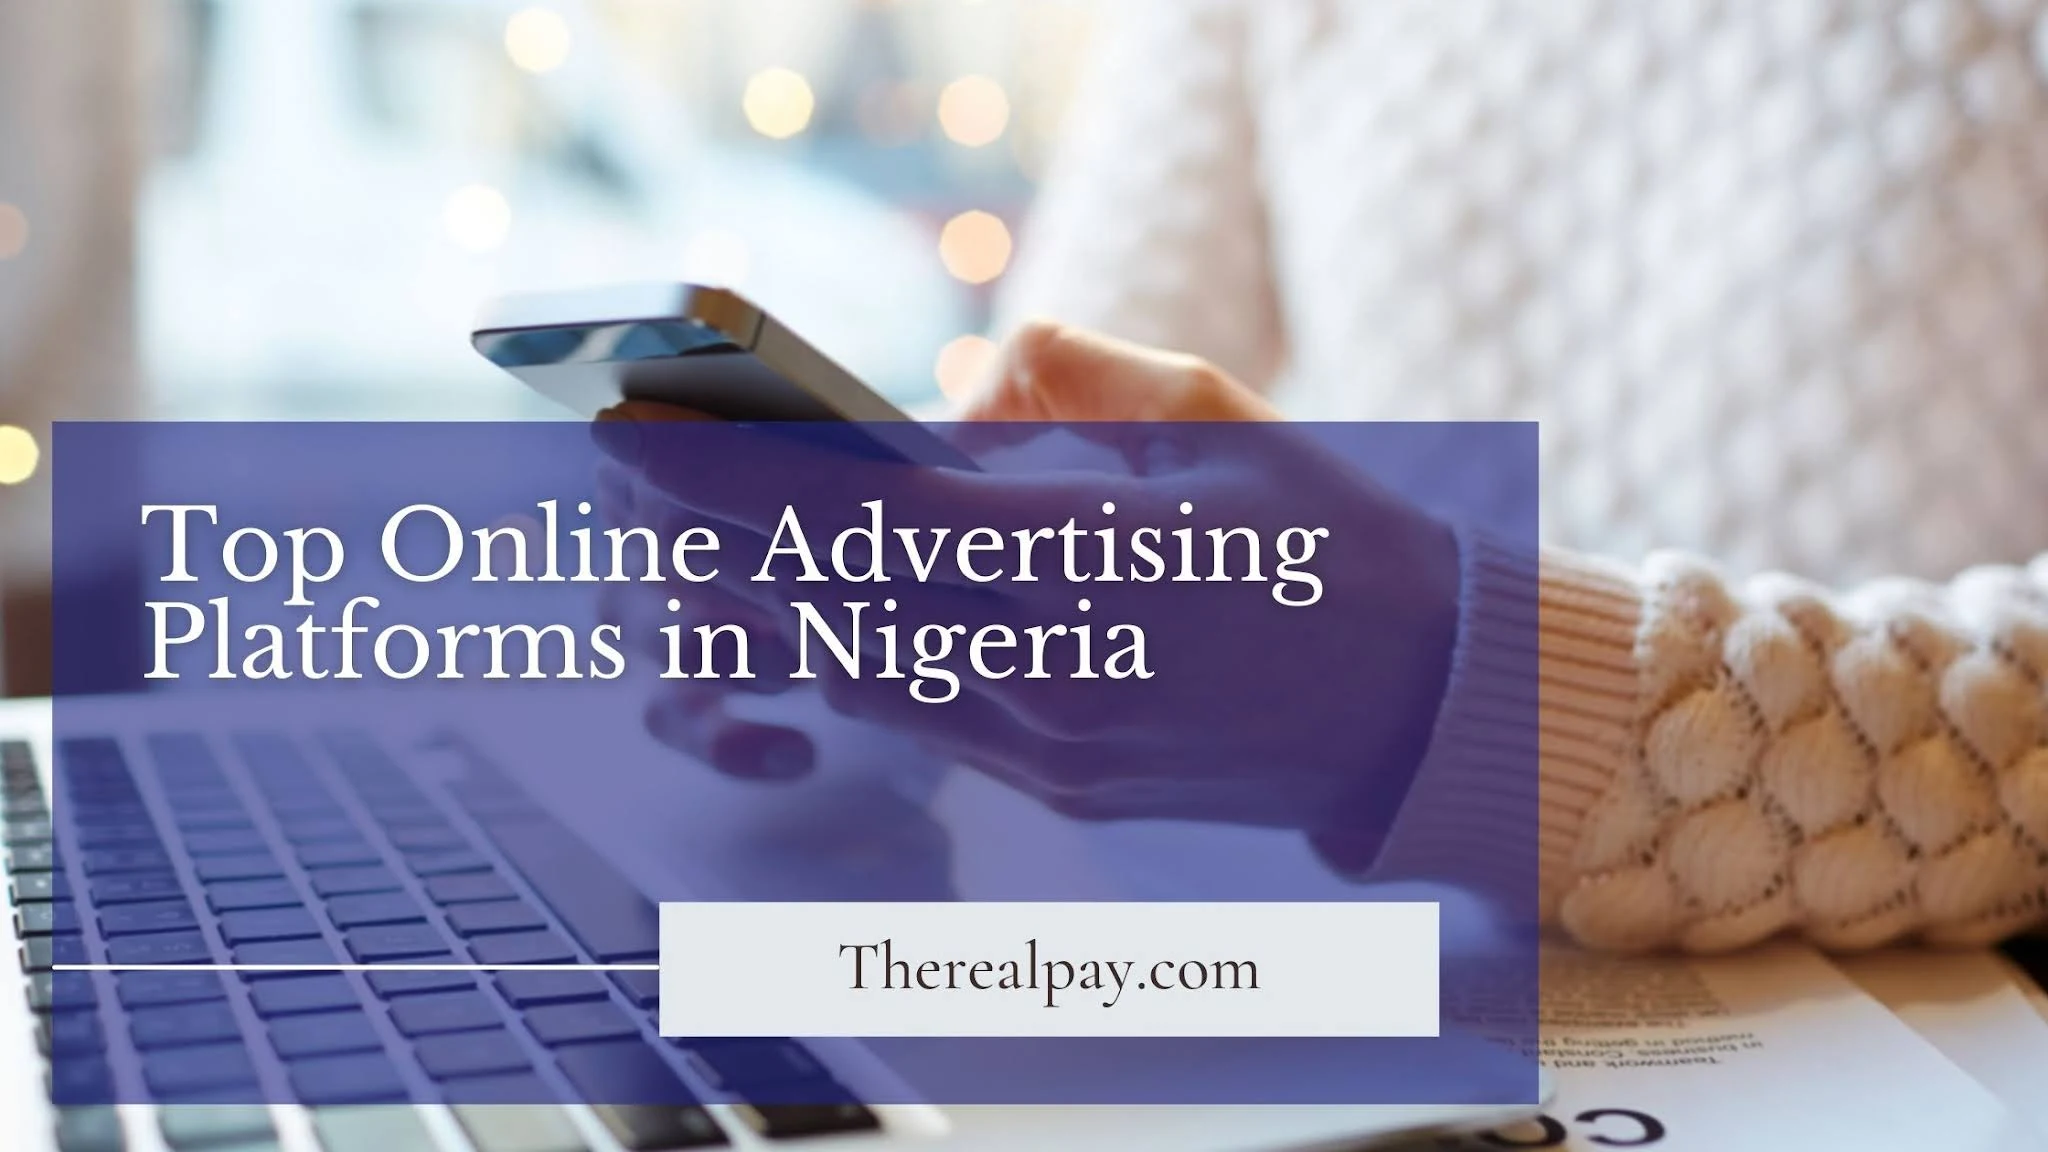 Top Online Advertising Platforms in Nigeria